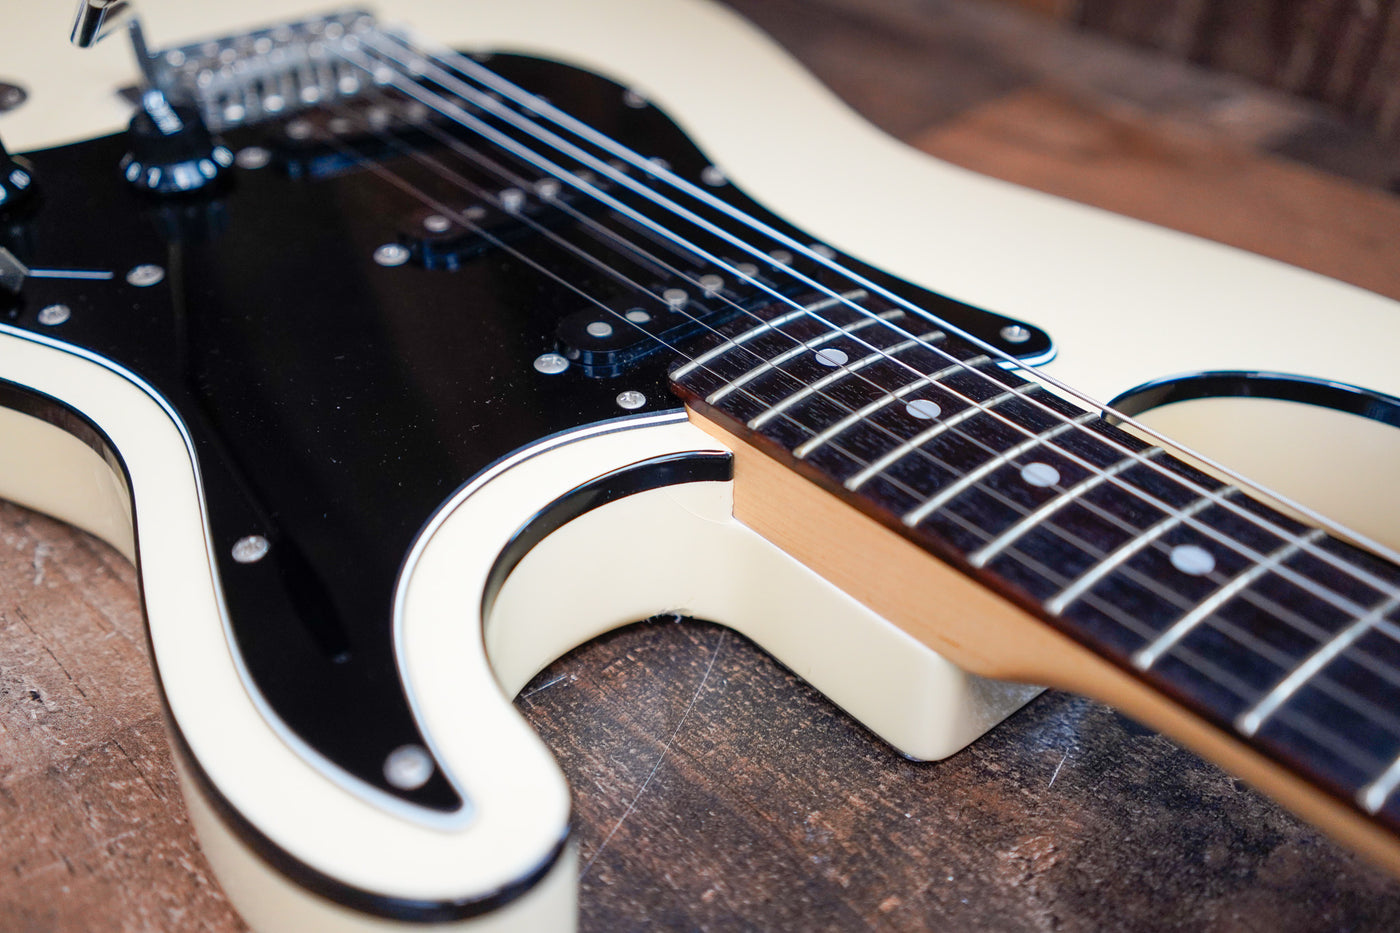 Fender AST Aerodyne Stratocaster 2012 Vintage White Made in Japan MIJ w/ Bag